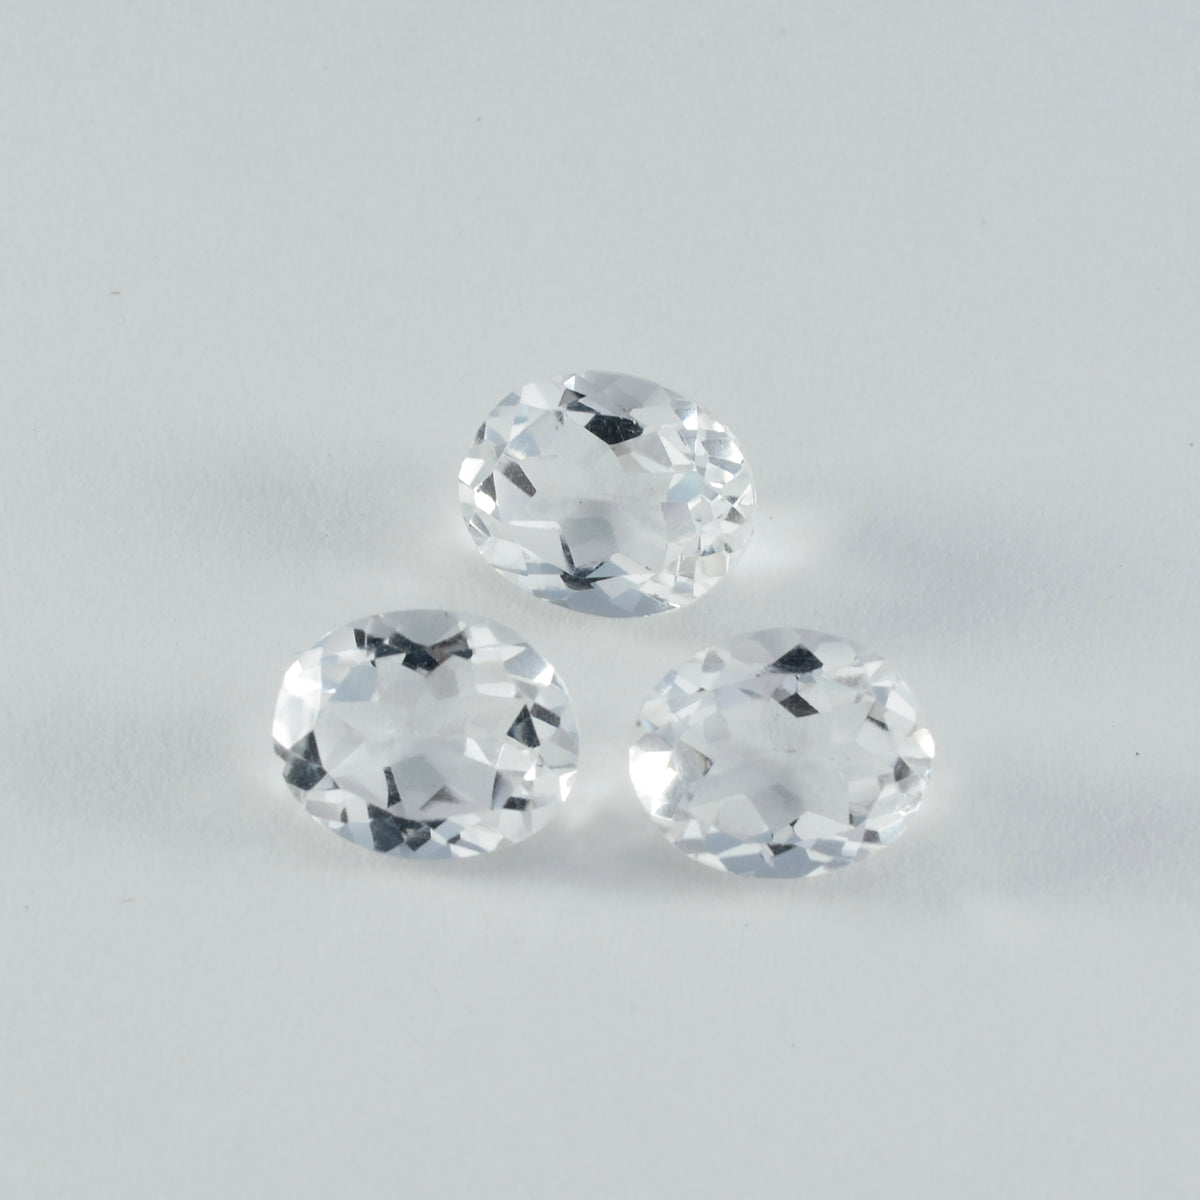 Riyogems 1PC White Crystal Quartz Faceted 8x10 mm Oval Shape nice-looking Quality Gemstone